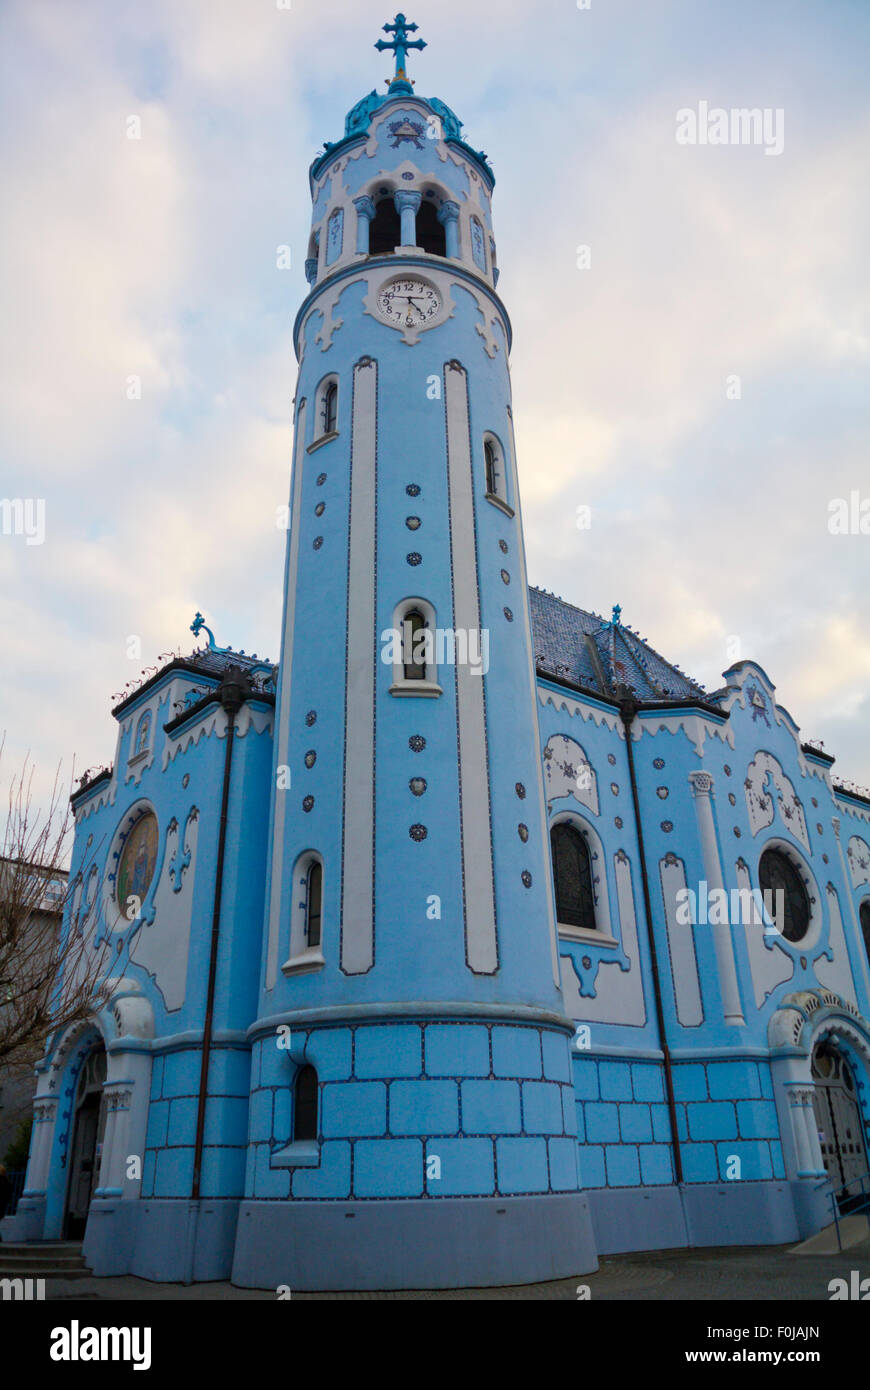 Modry Kostolik, blu chiesa di Santa Elisabetta (1908), secessionista ungherese chiesa cattolica romana, Bratislava, Slovacchia, Europa Foto Stock